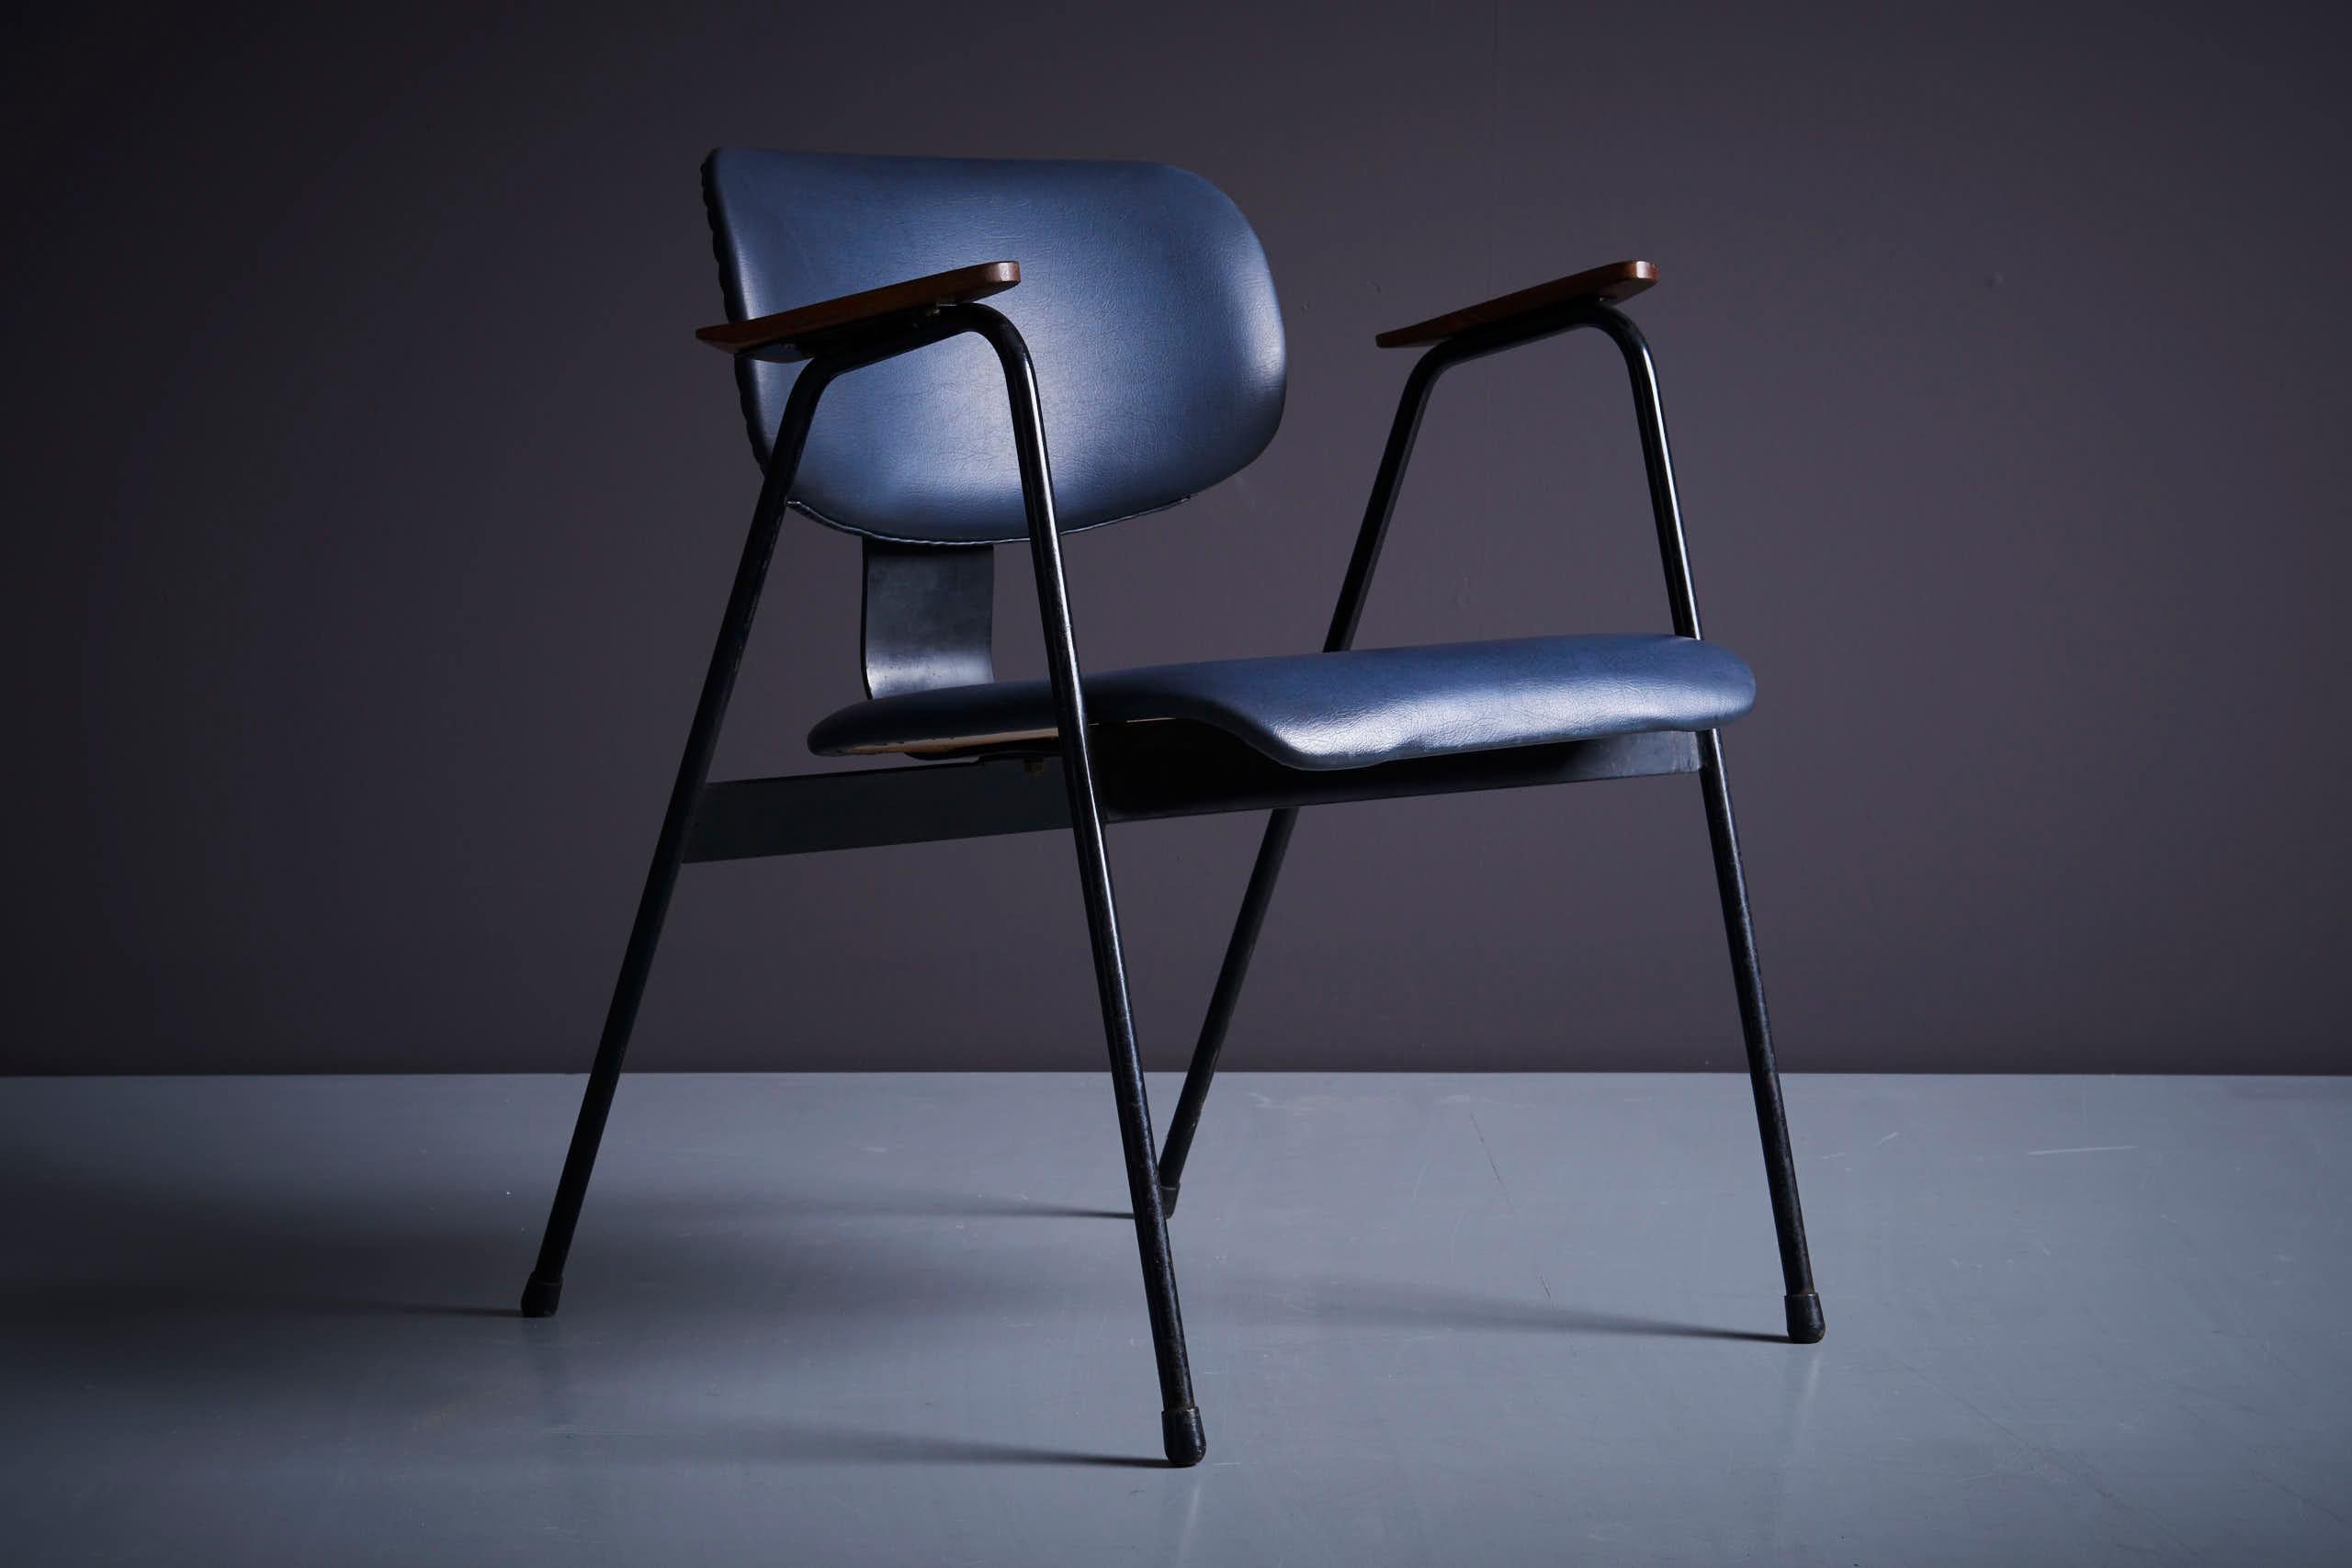 Pair of Willy van der Meeren Chairs in metal & dark blue skai, Belgium - 1950s. 